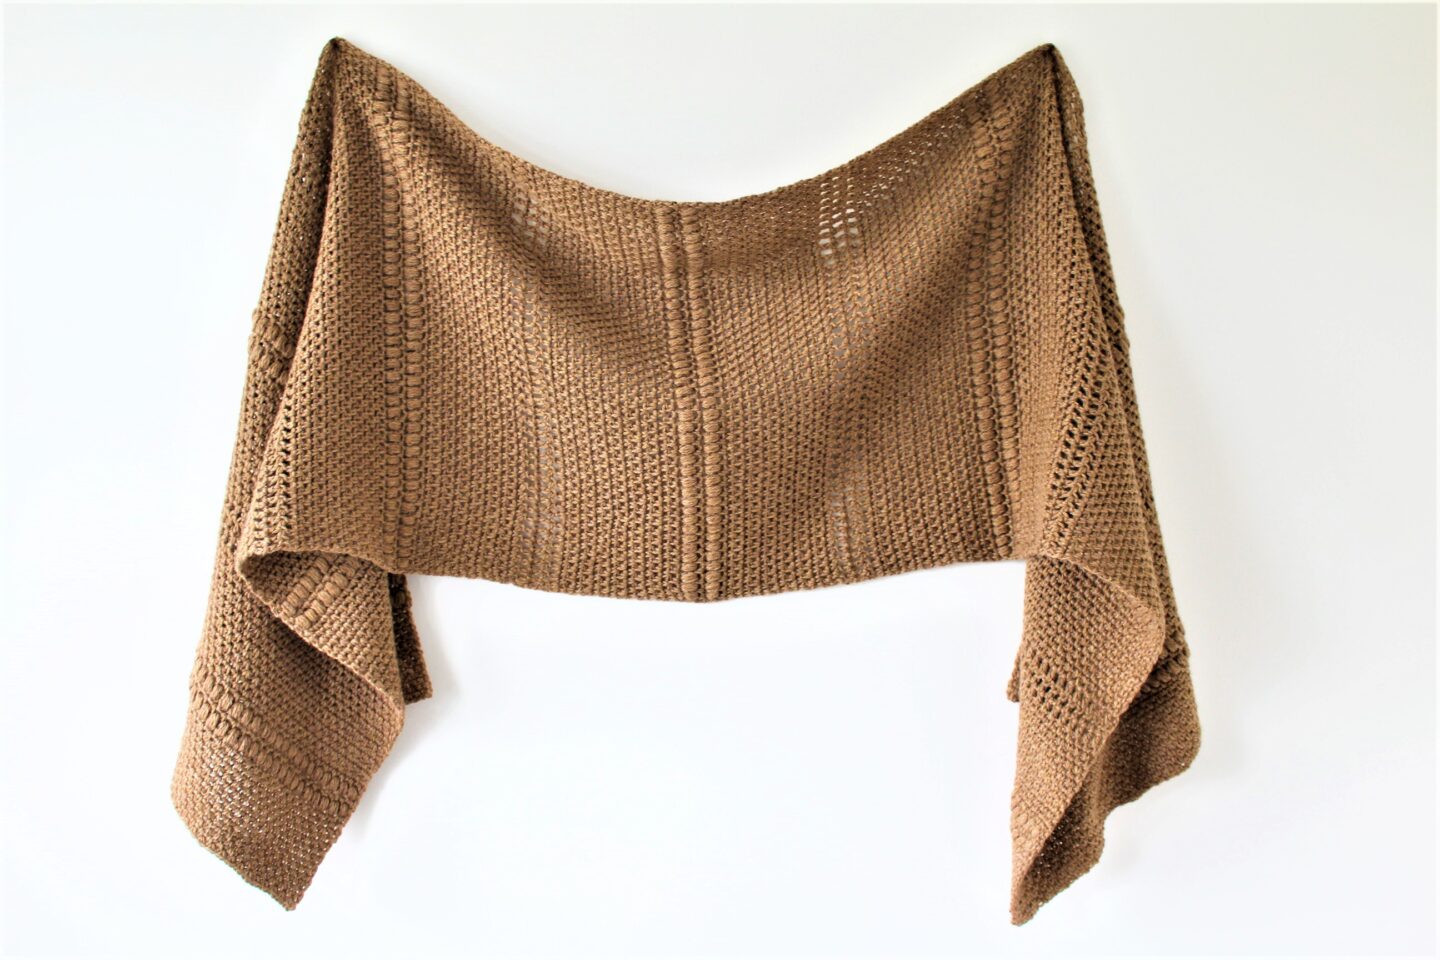 Straight view of the Brianna Sideways Shawl - Free Crochet pattern